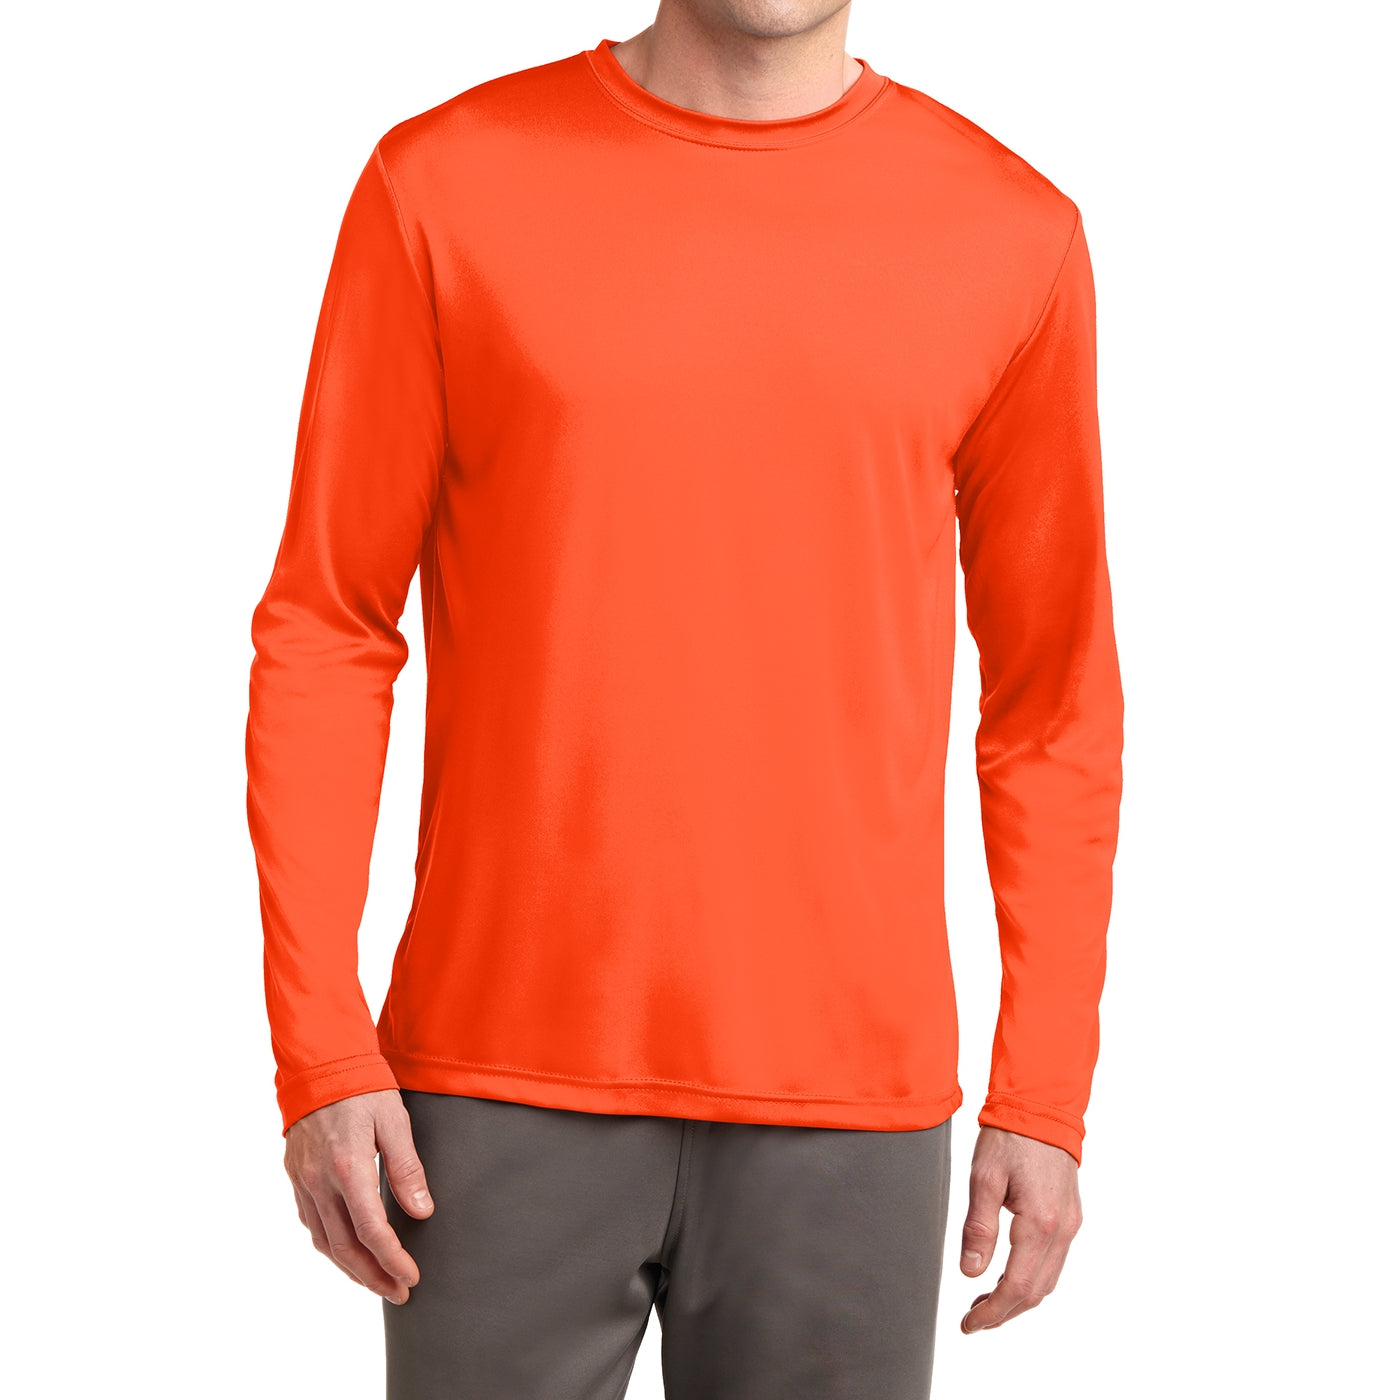 Men's Long Sleeve PosiCharge Competitor Tee - Neon Orange